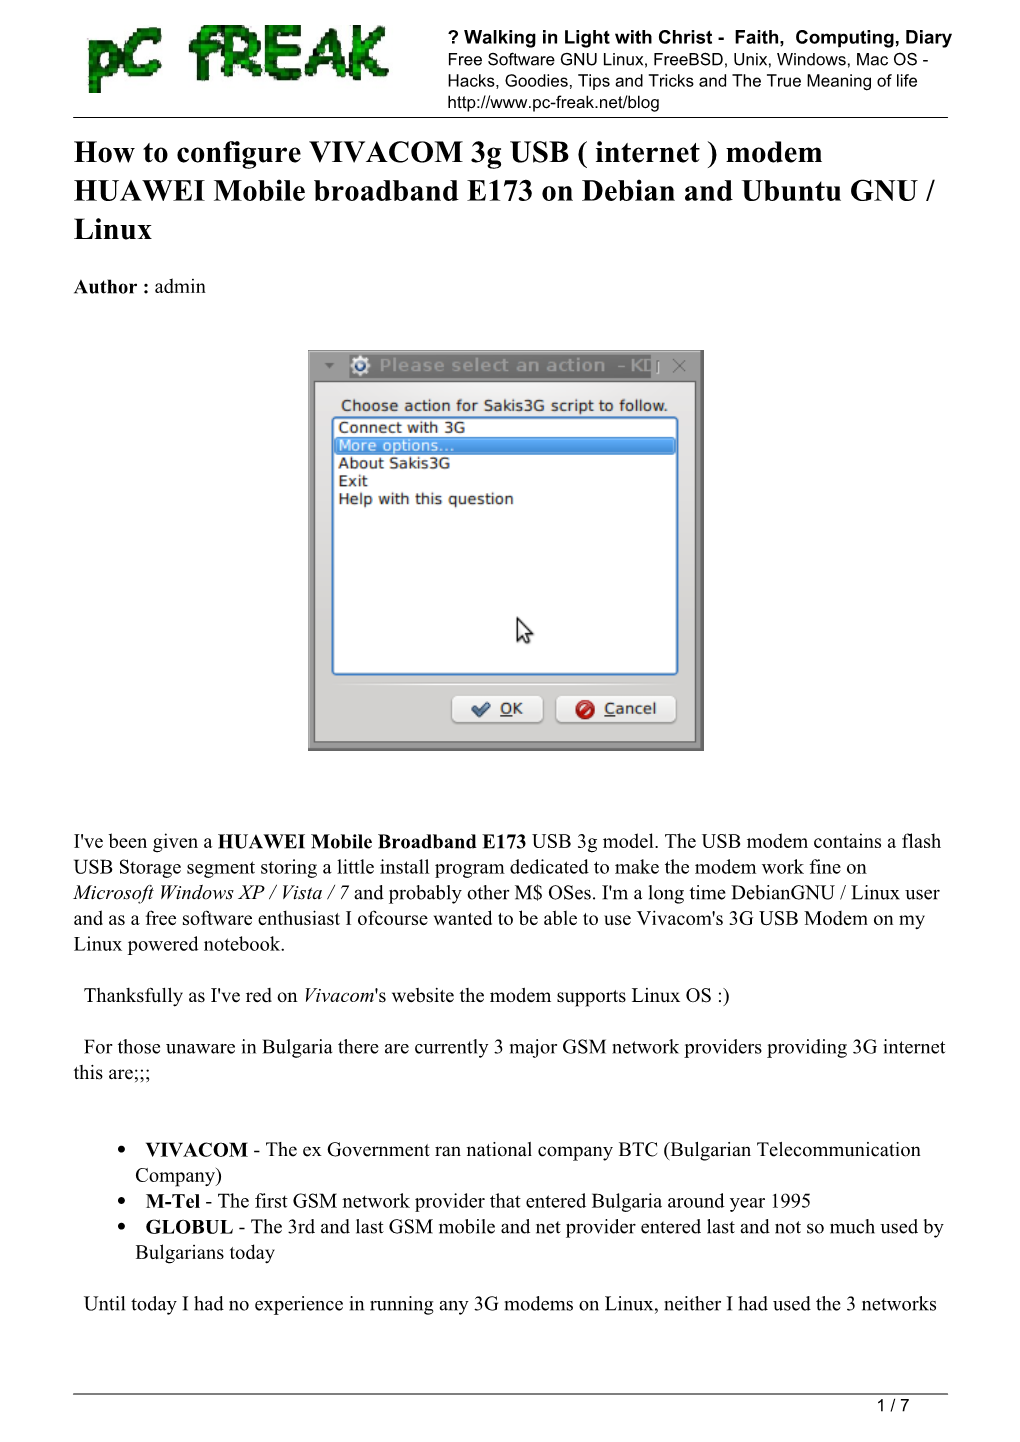 How to Configure VIVACOM 3G USB ( Internet ) Modem HUAWEI Mobile Broadband E173 on Debian and Ubuntu GNU / Linux